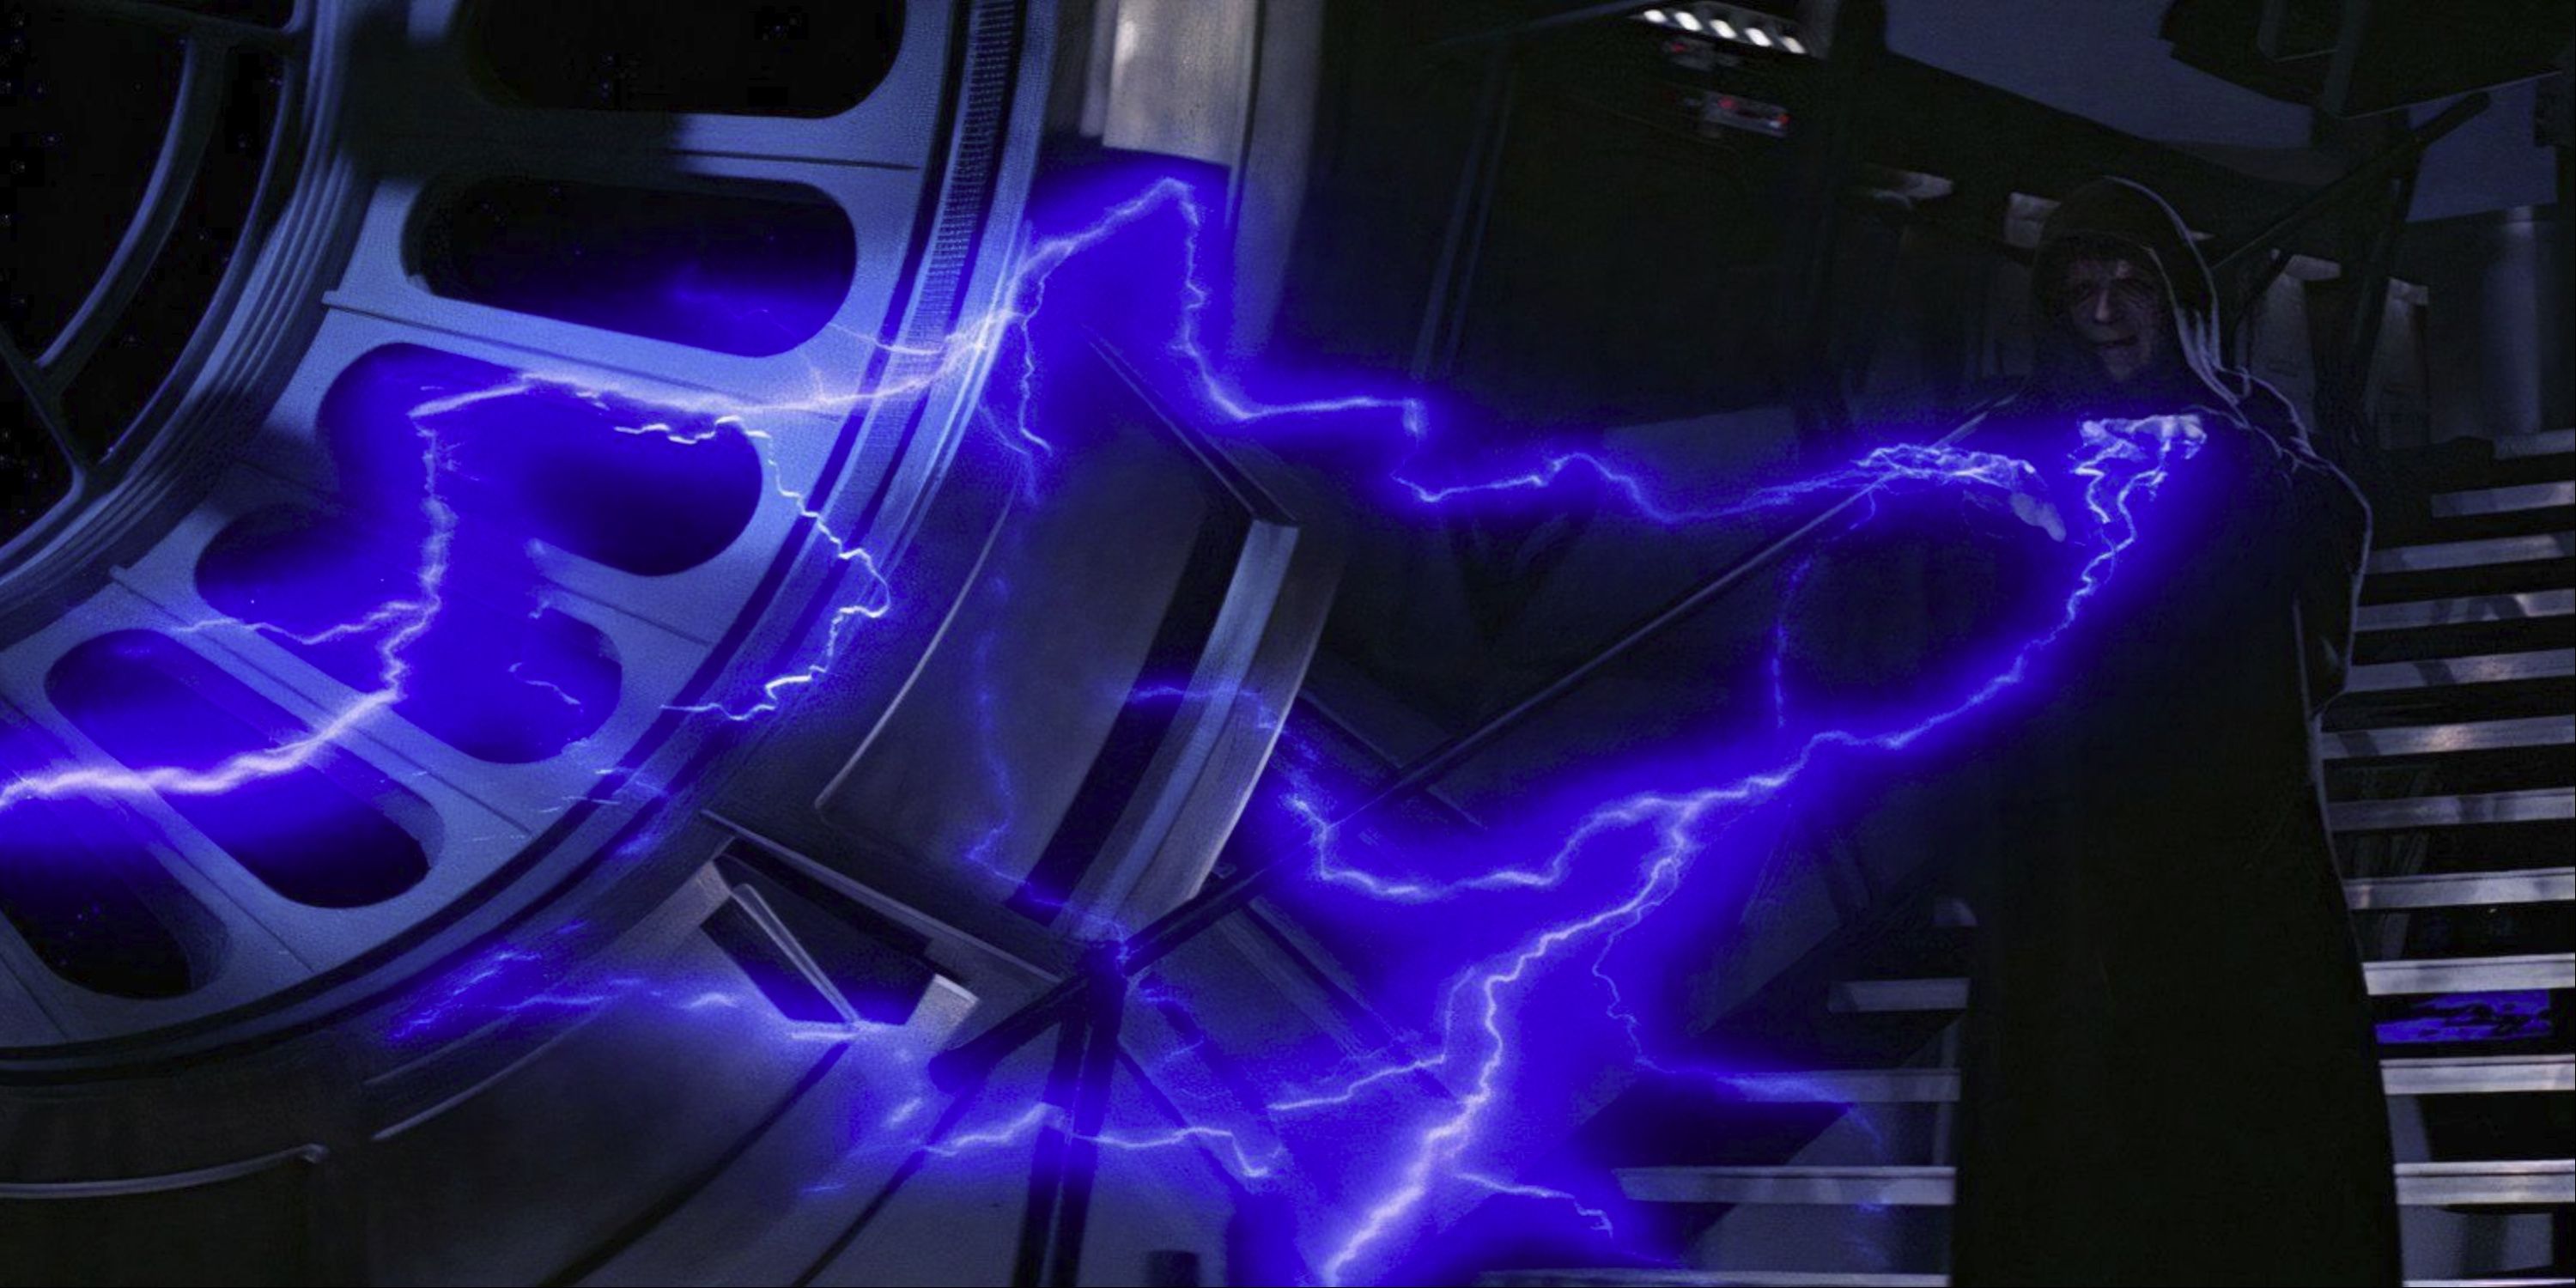 The Emperor unleashes Sith Lightning unto Luke Skywalker